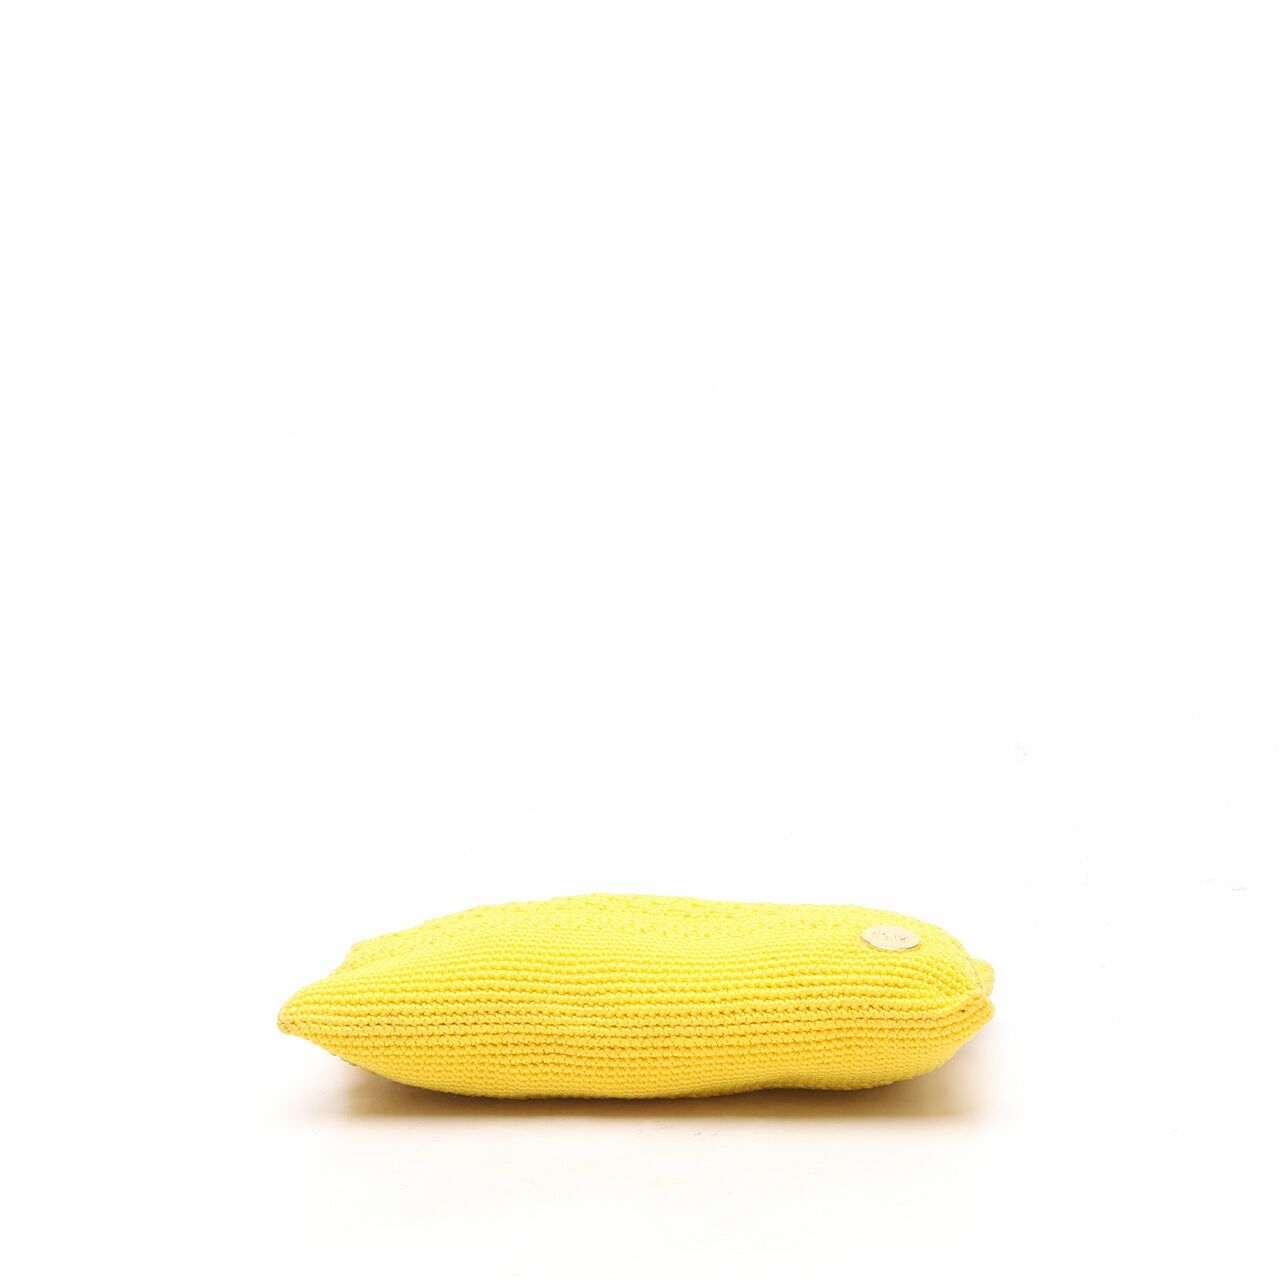 DOWA Yellow Pouch